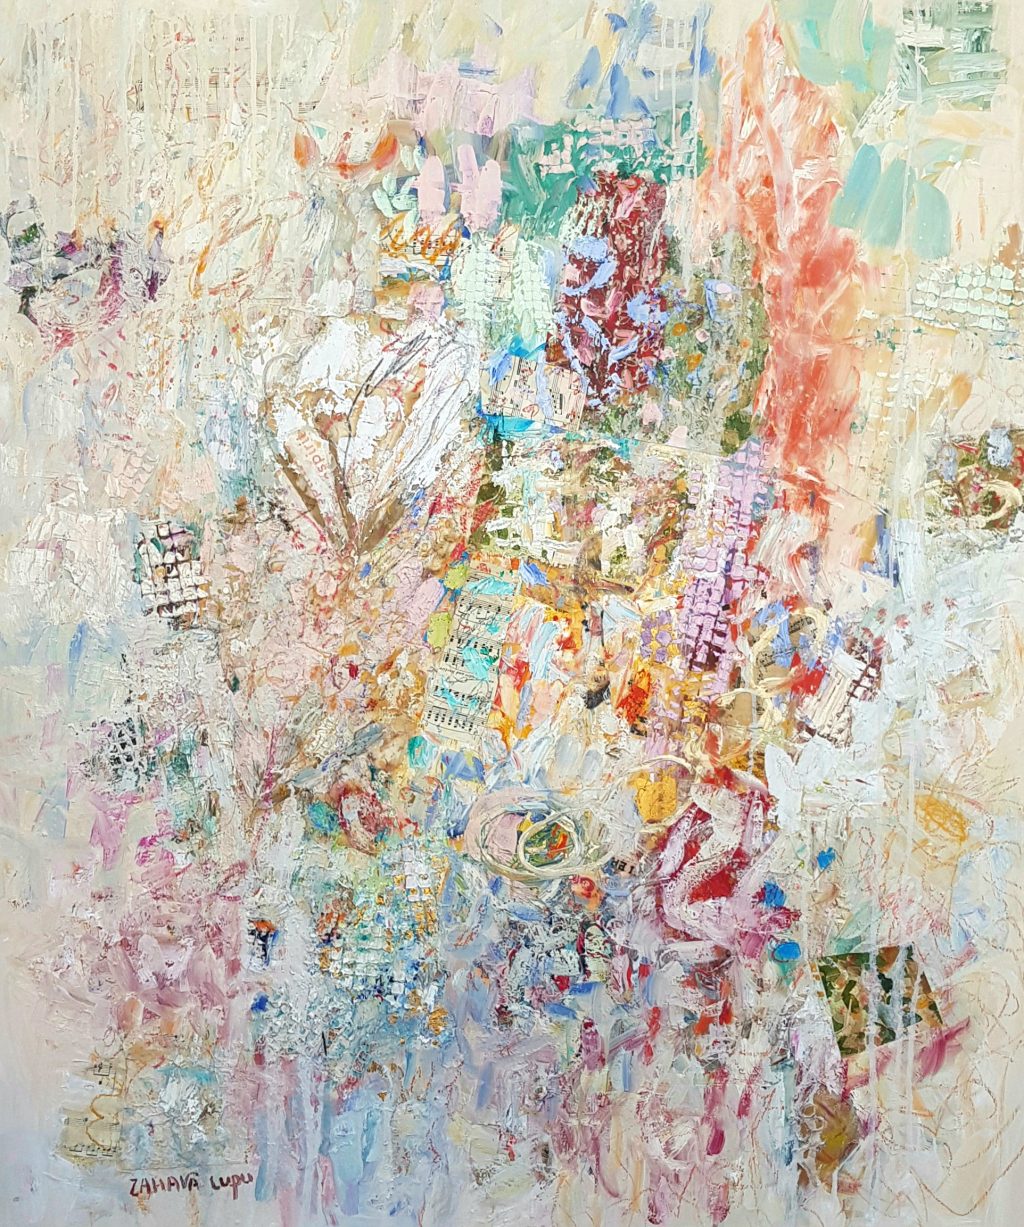 Art time gallery Jerusalem(Art online) -  Zahava Lupu - Music Abstract - Original Oil on Canvas - 120 x 100 cm cm / 47 x 40 inches